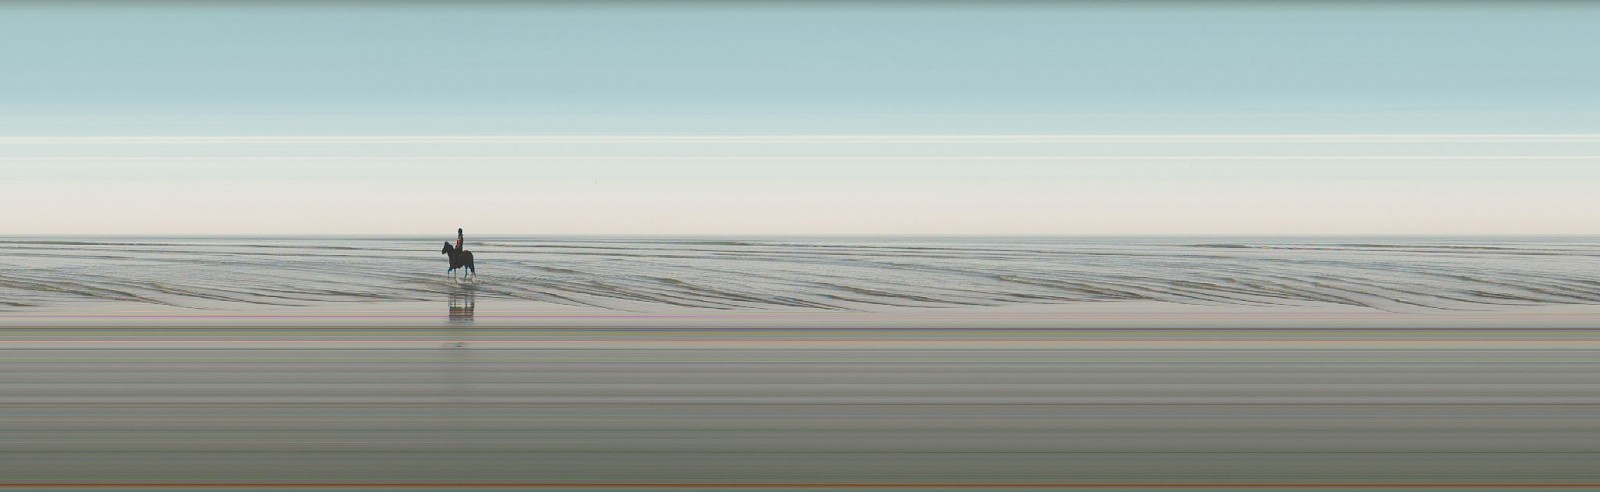 Jay Mark Johnson, BRIGHTON BEACH HORSEBACK, 2012 United Kingdom
archival pigment on paper, mounted on aluminum, 40 x 100 in. (101.6 x 254 cm)